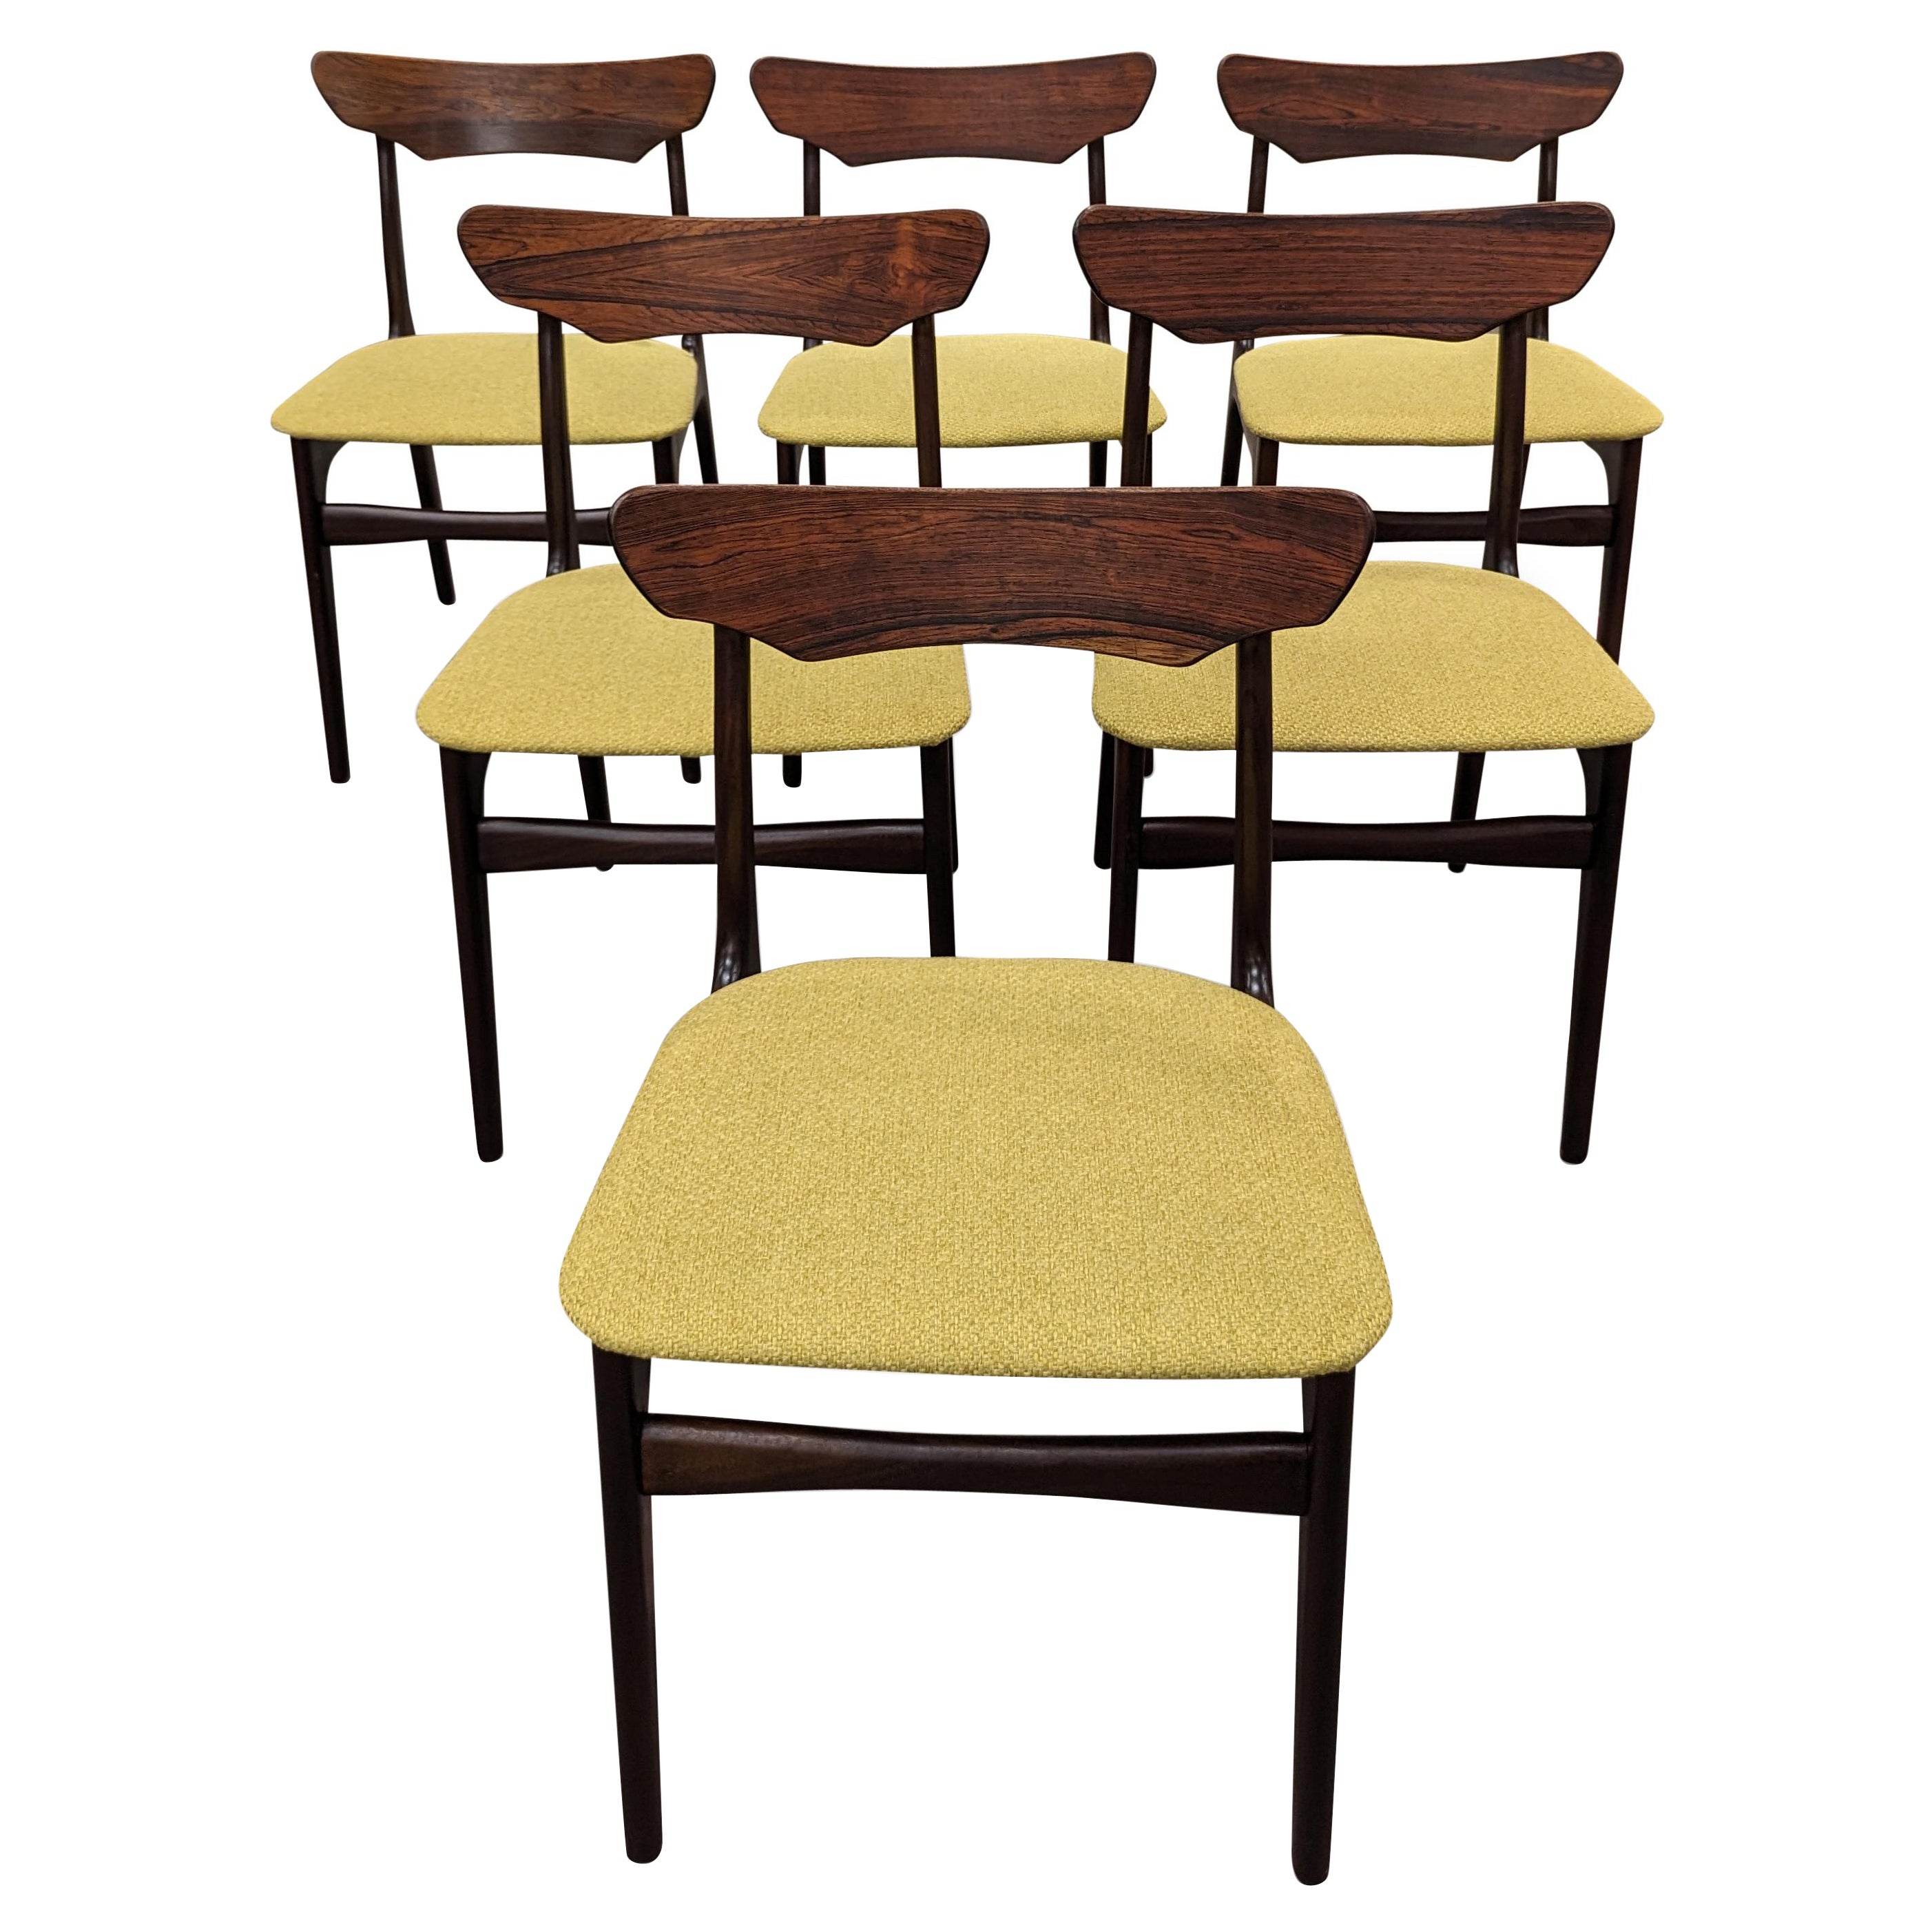 6 Schoning Elegaard Rosewood Dining Chairs - 0224121 Vintage Danish Mid Century